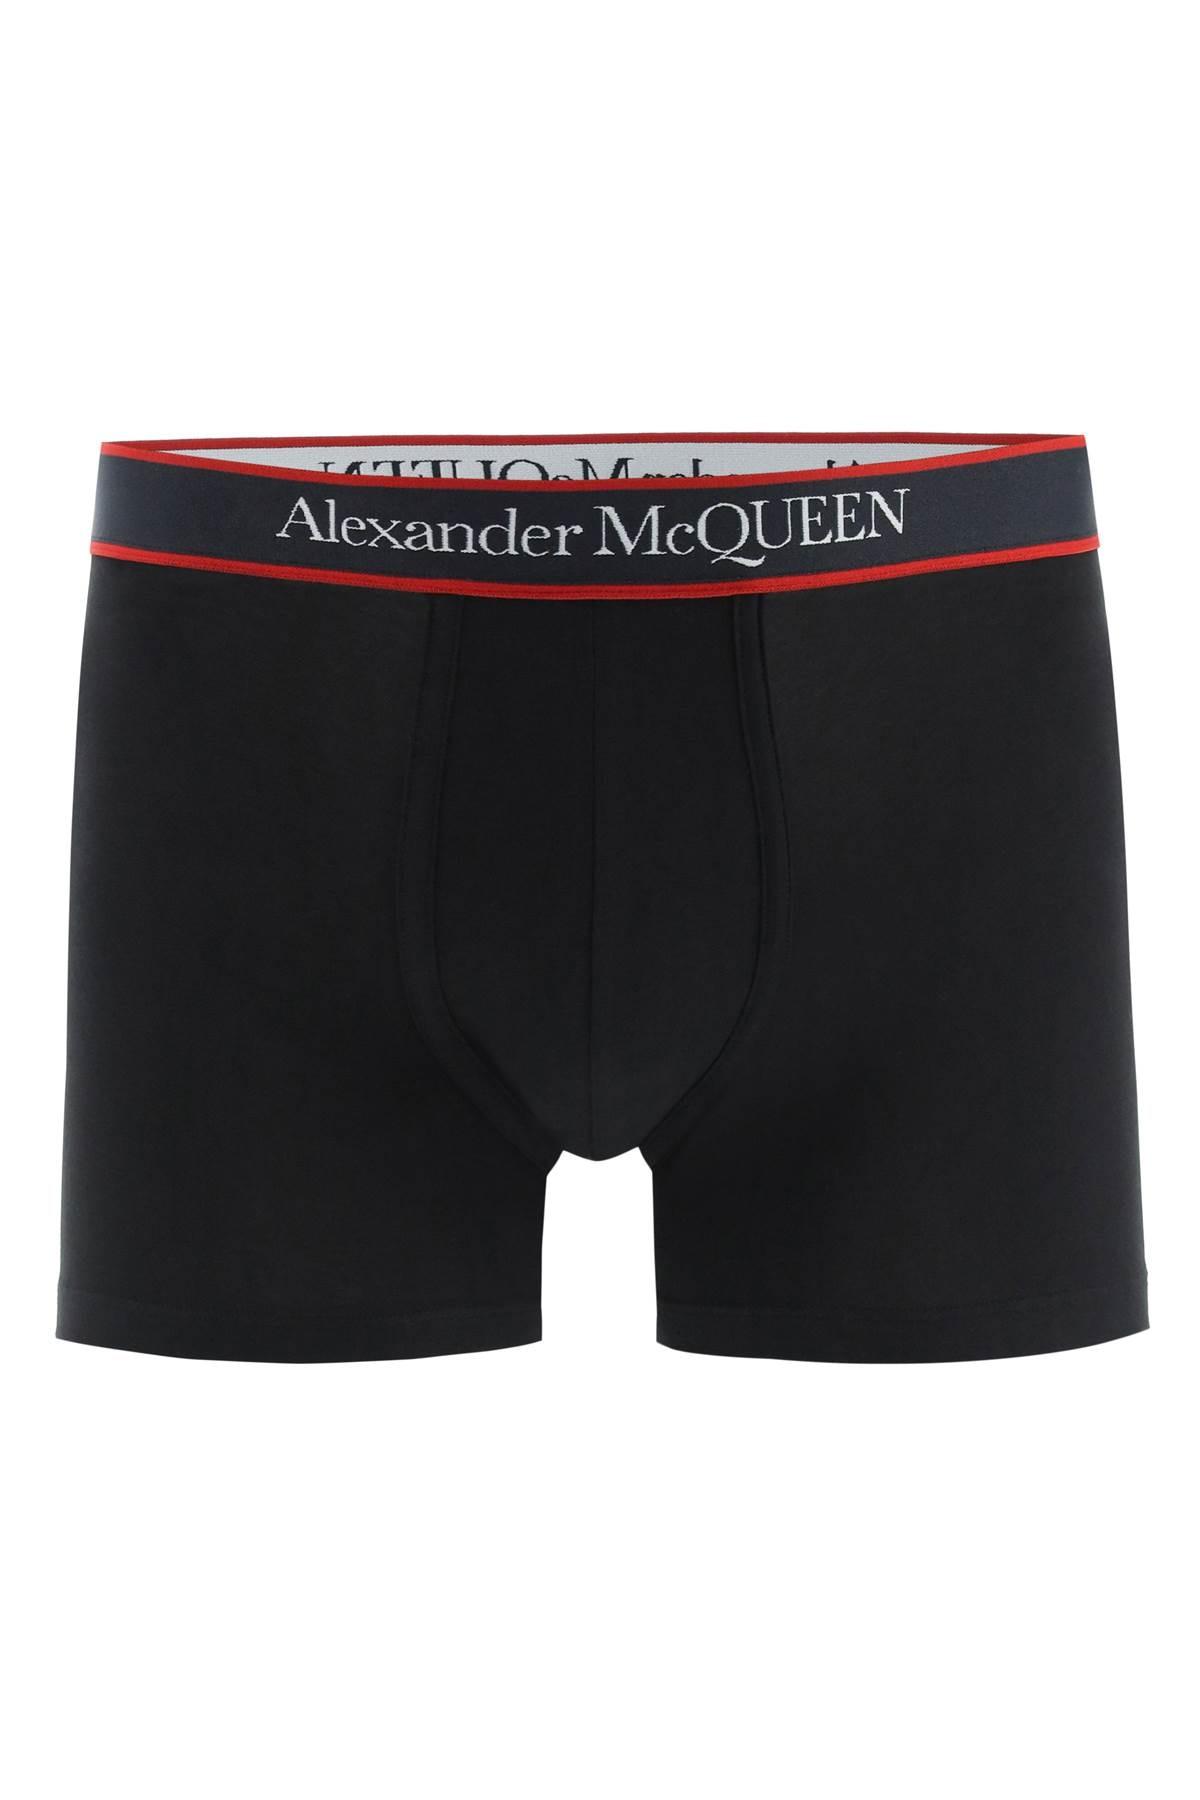 Alexander McQueen Selvedge Boxers in Black for Men Mens Clothing Underwear Boxers 